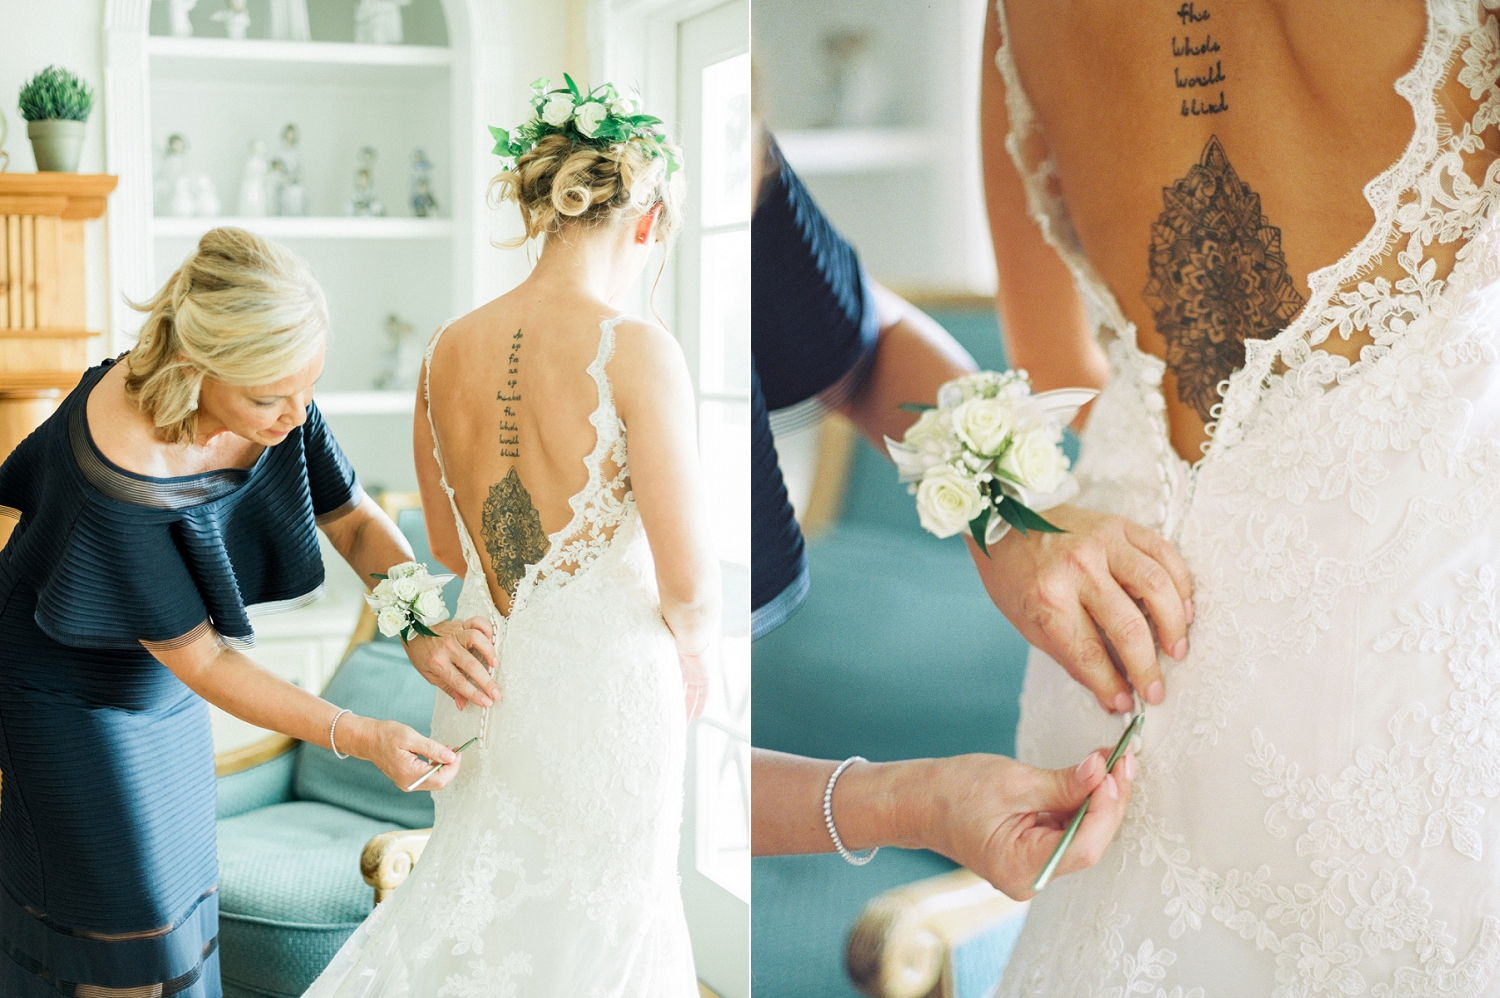 stella york wedding gown, lace wedding gown, bride getting into dress, tattoo'd bride